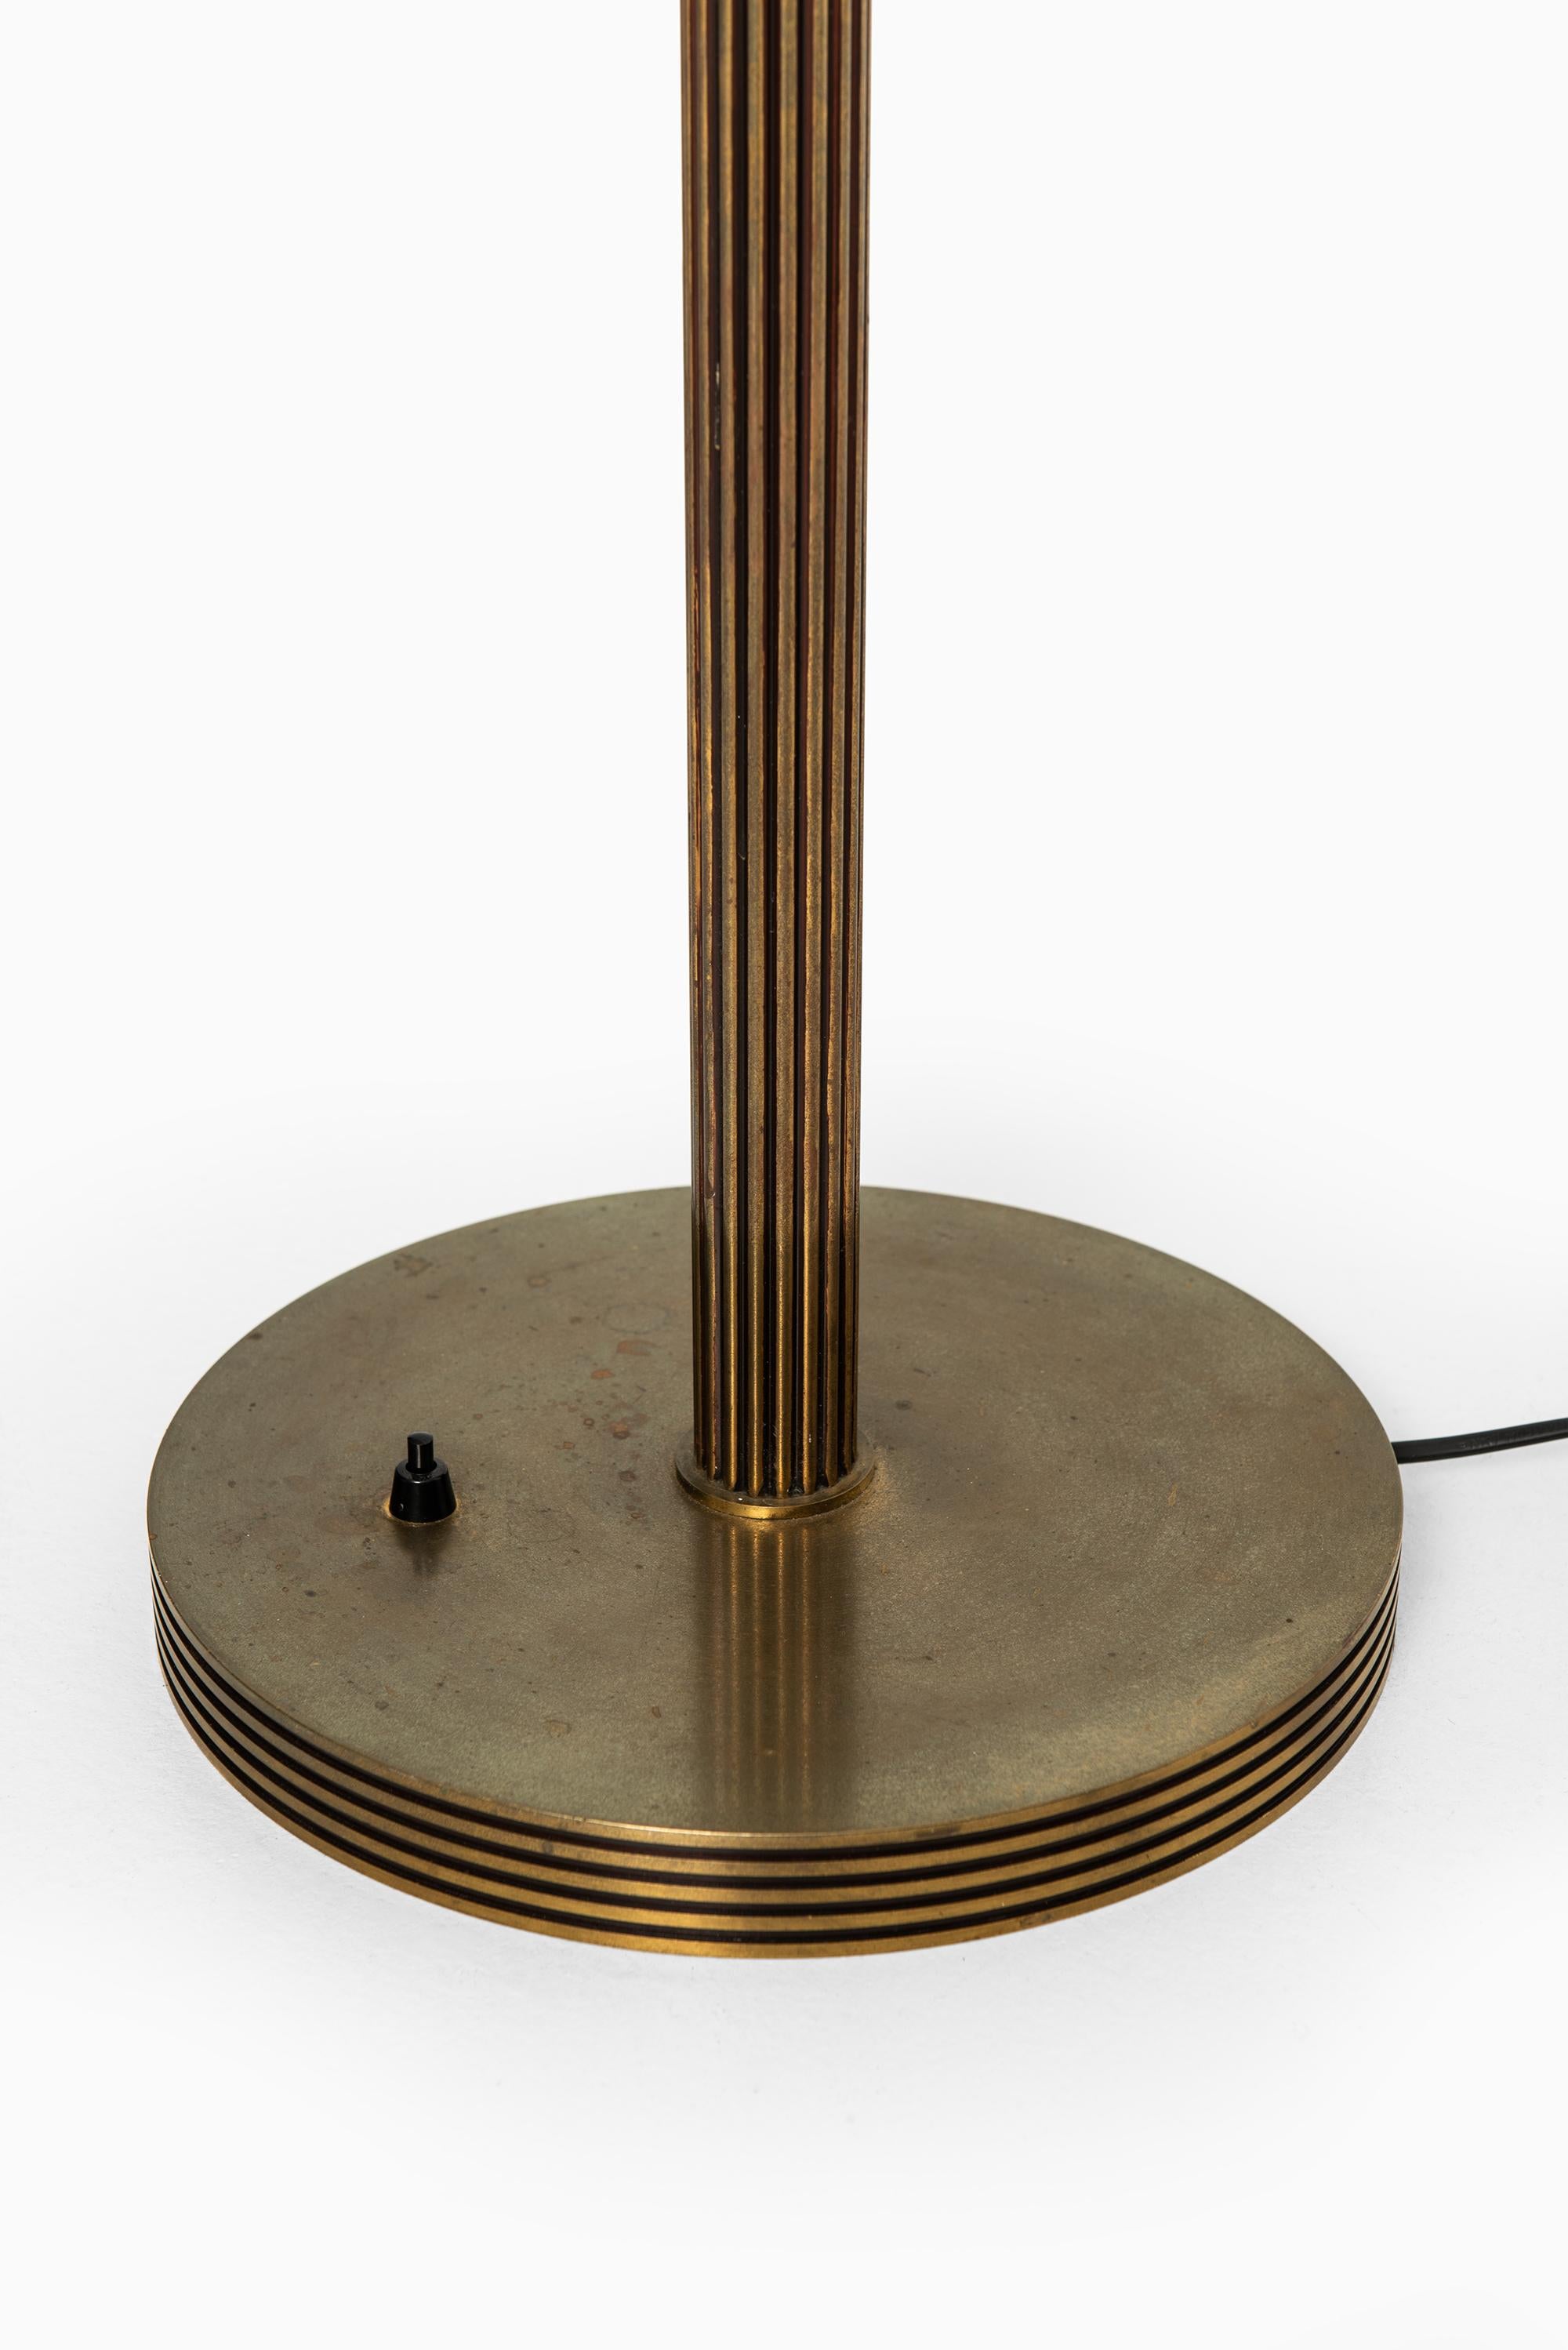 Scandinavian Modern Floor Lamp / Uplight in Brass and Glass Produced in Sweden